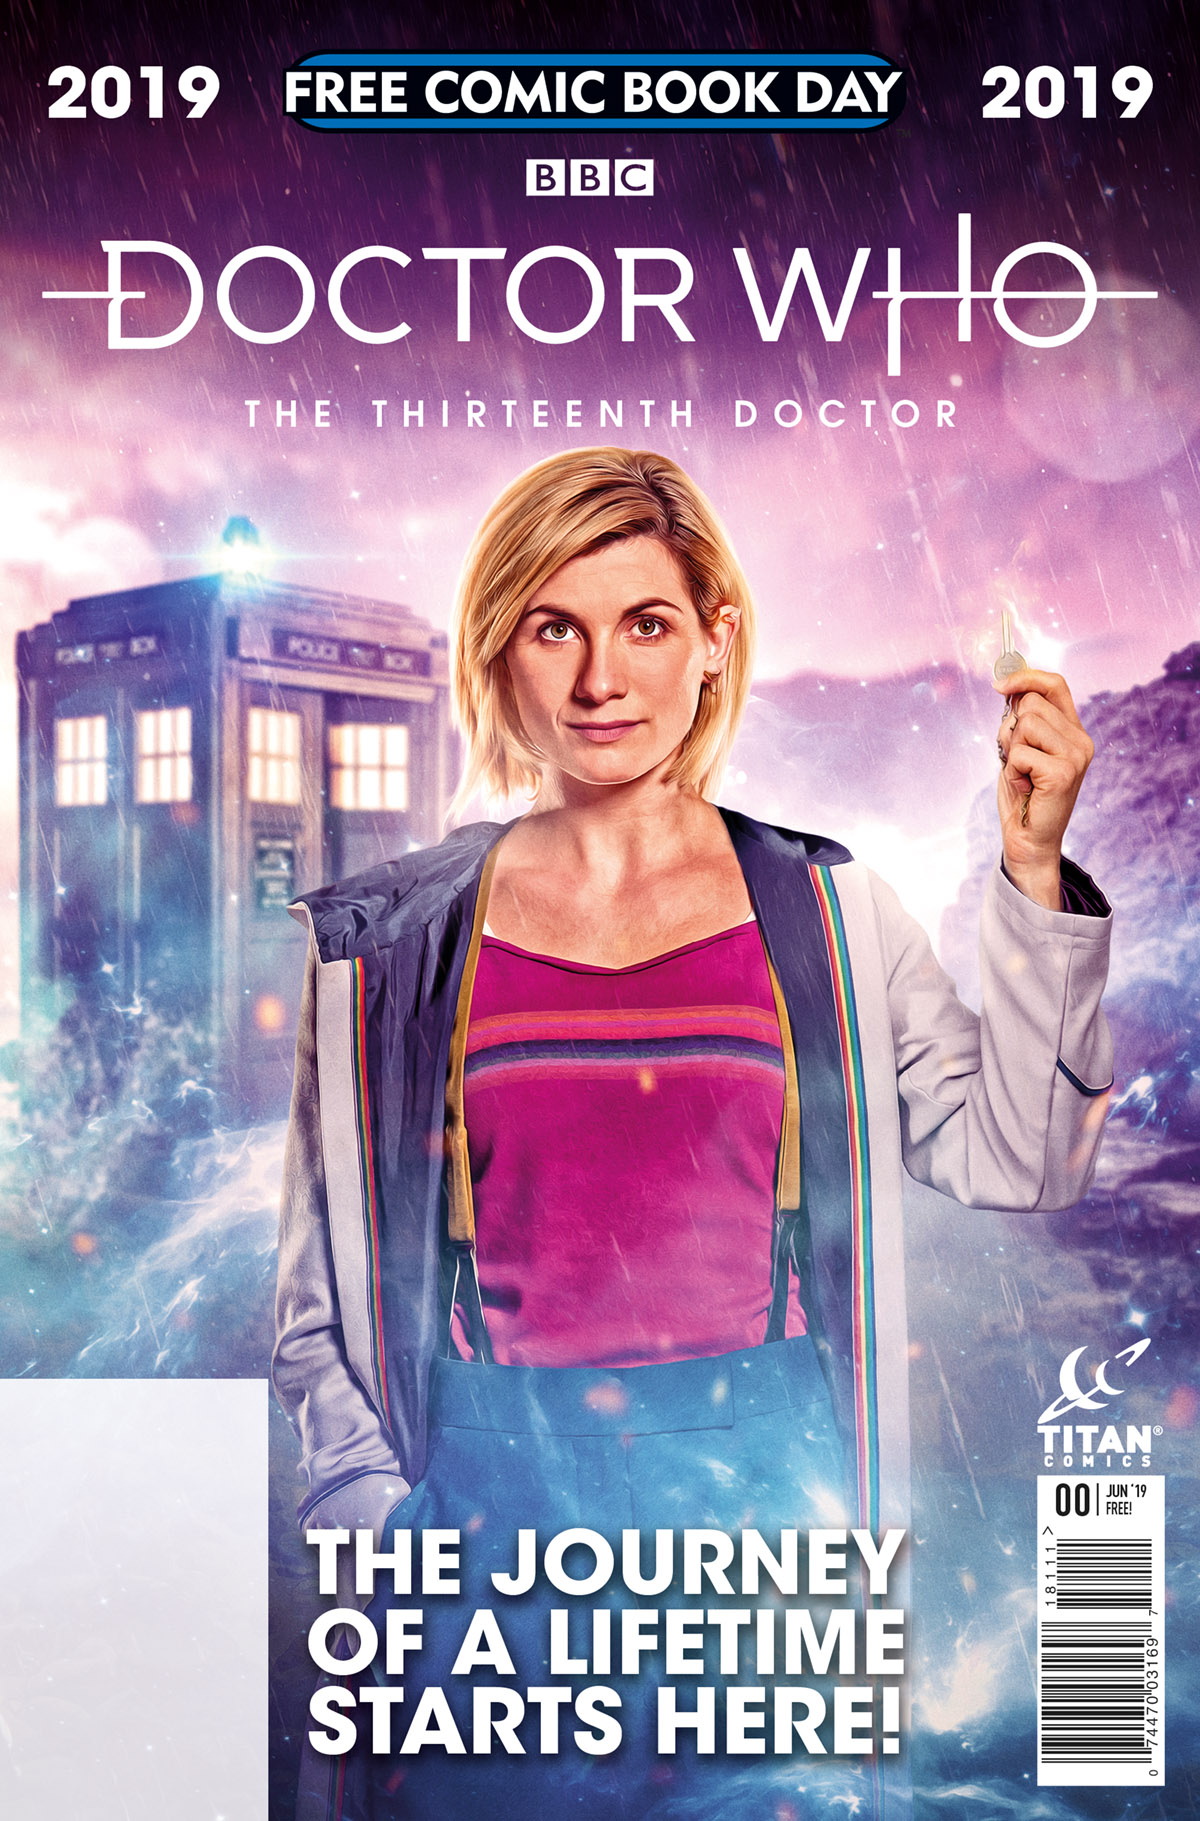 FCBD19_G_Titan Comics_Doctor Who 13th Doctor_2